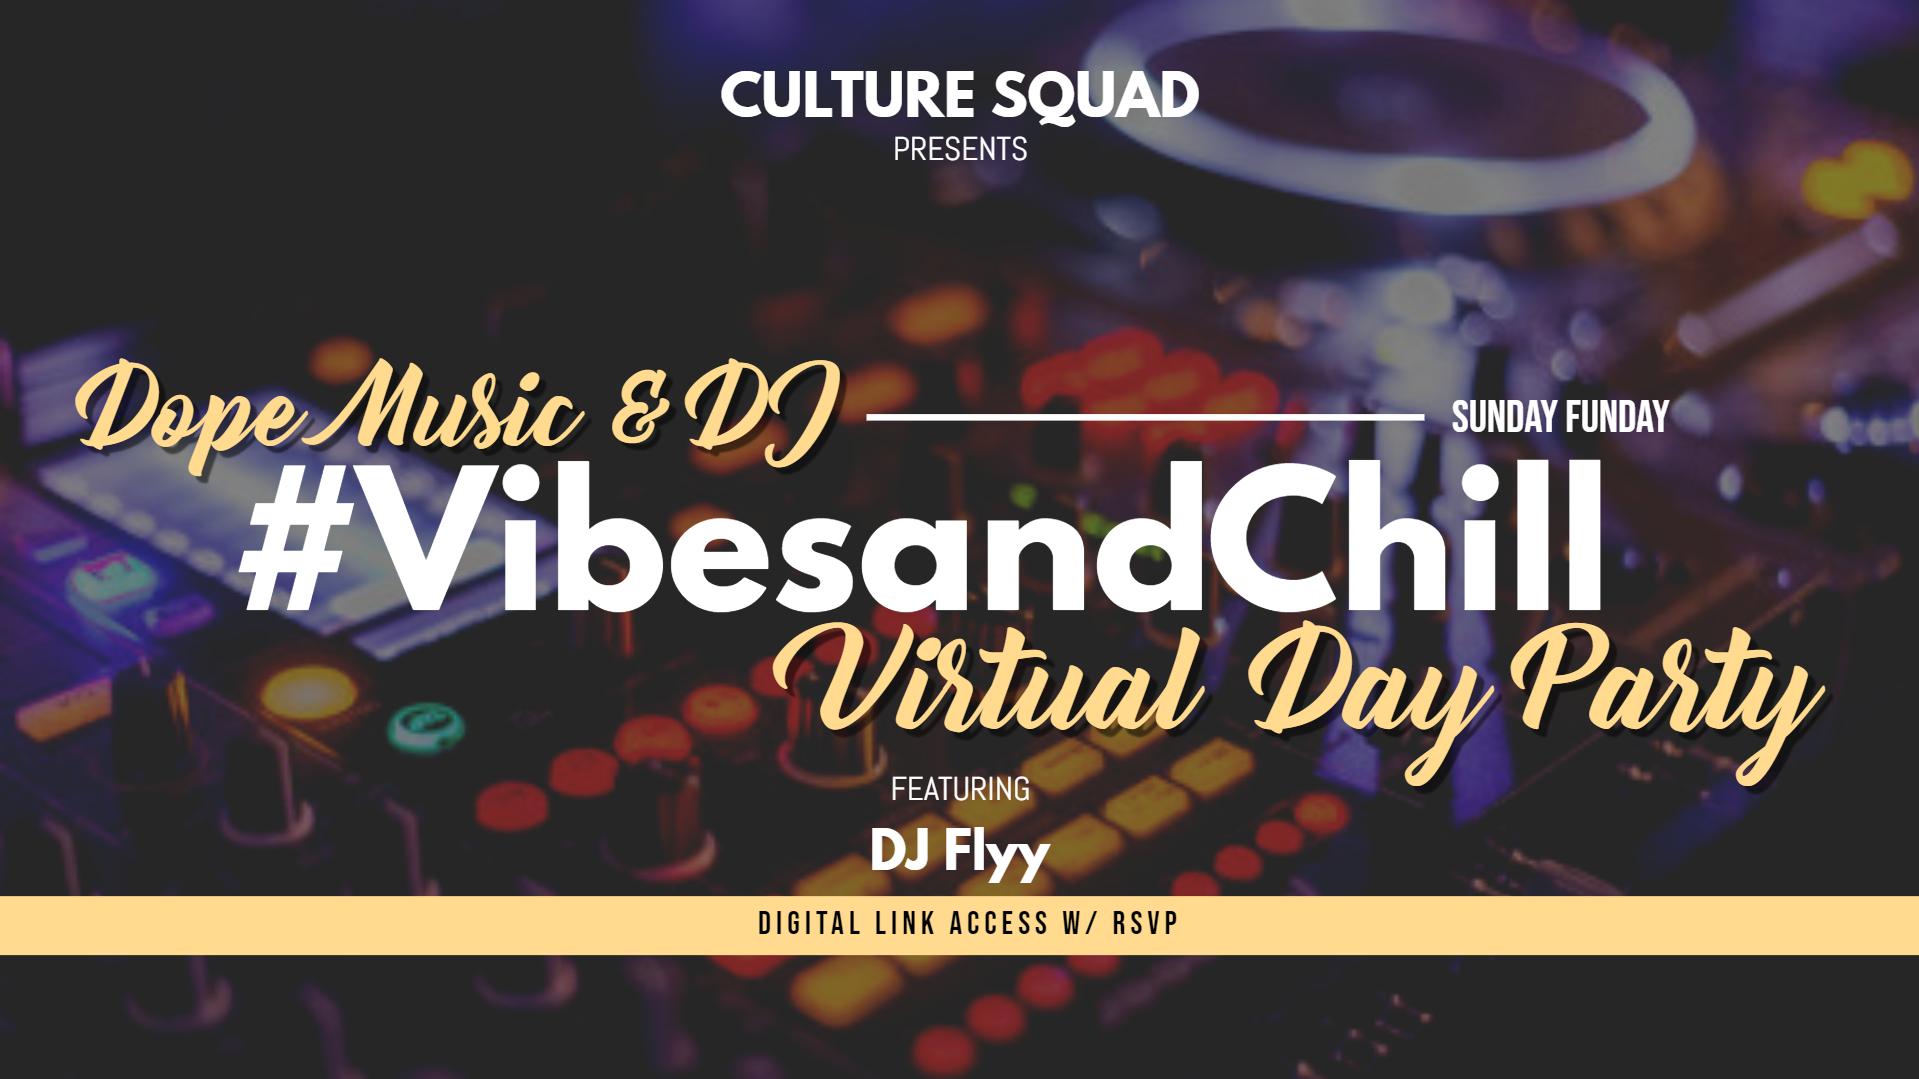  #vibesandchill- A Dope Music & DJ Virtual Day Party